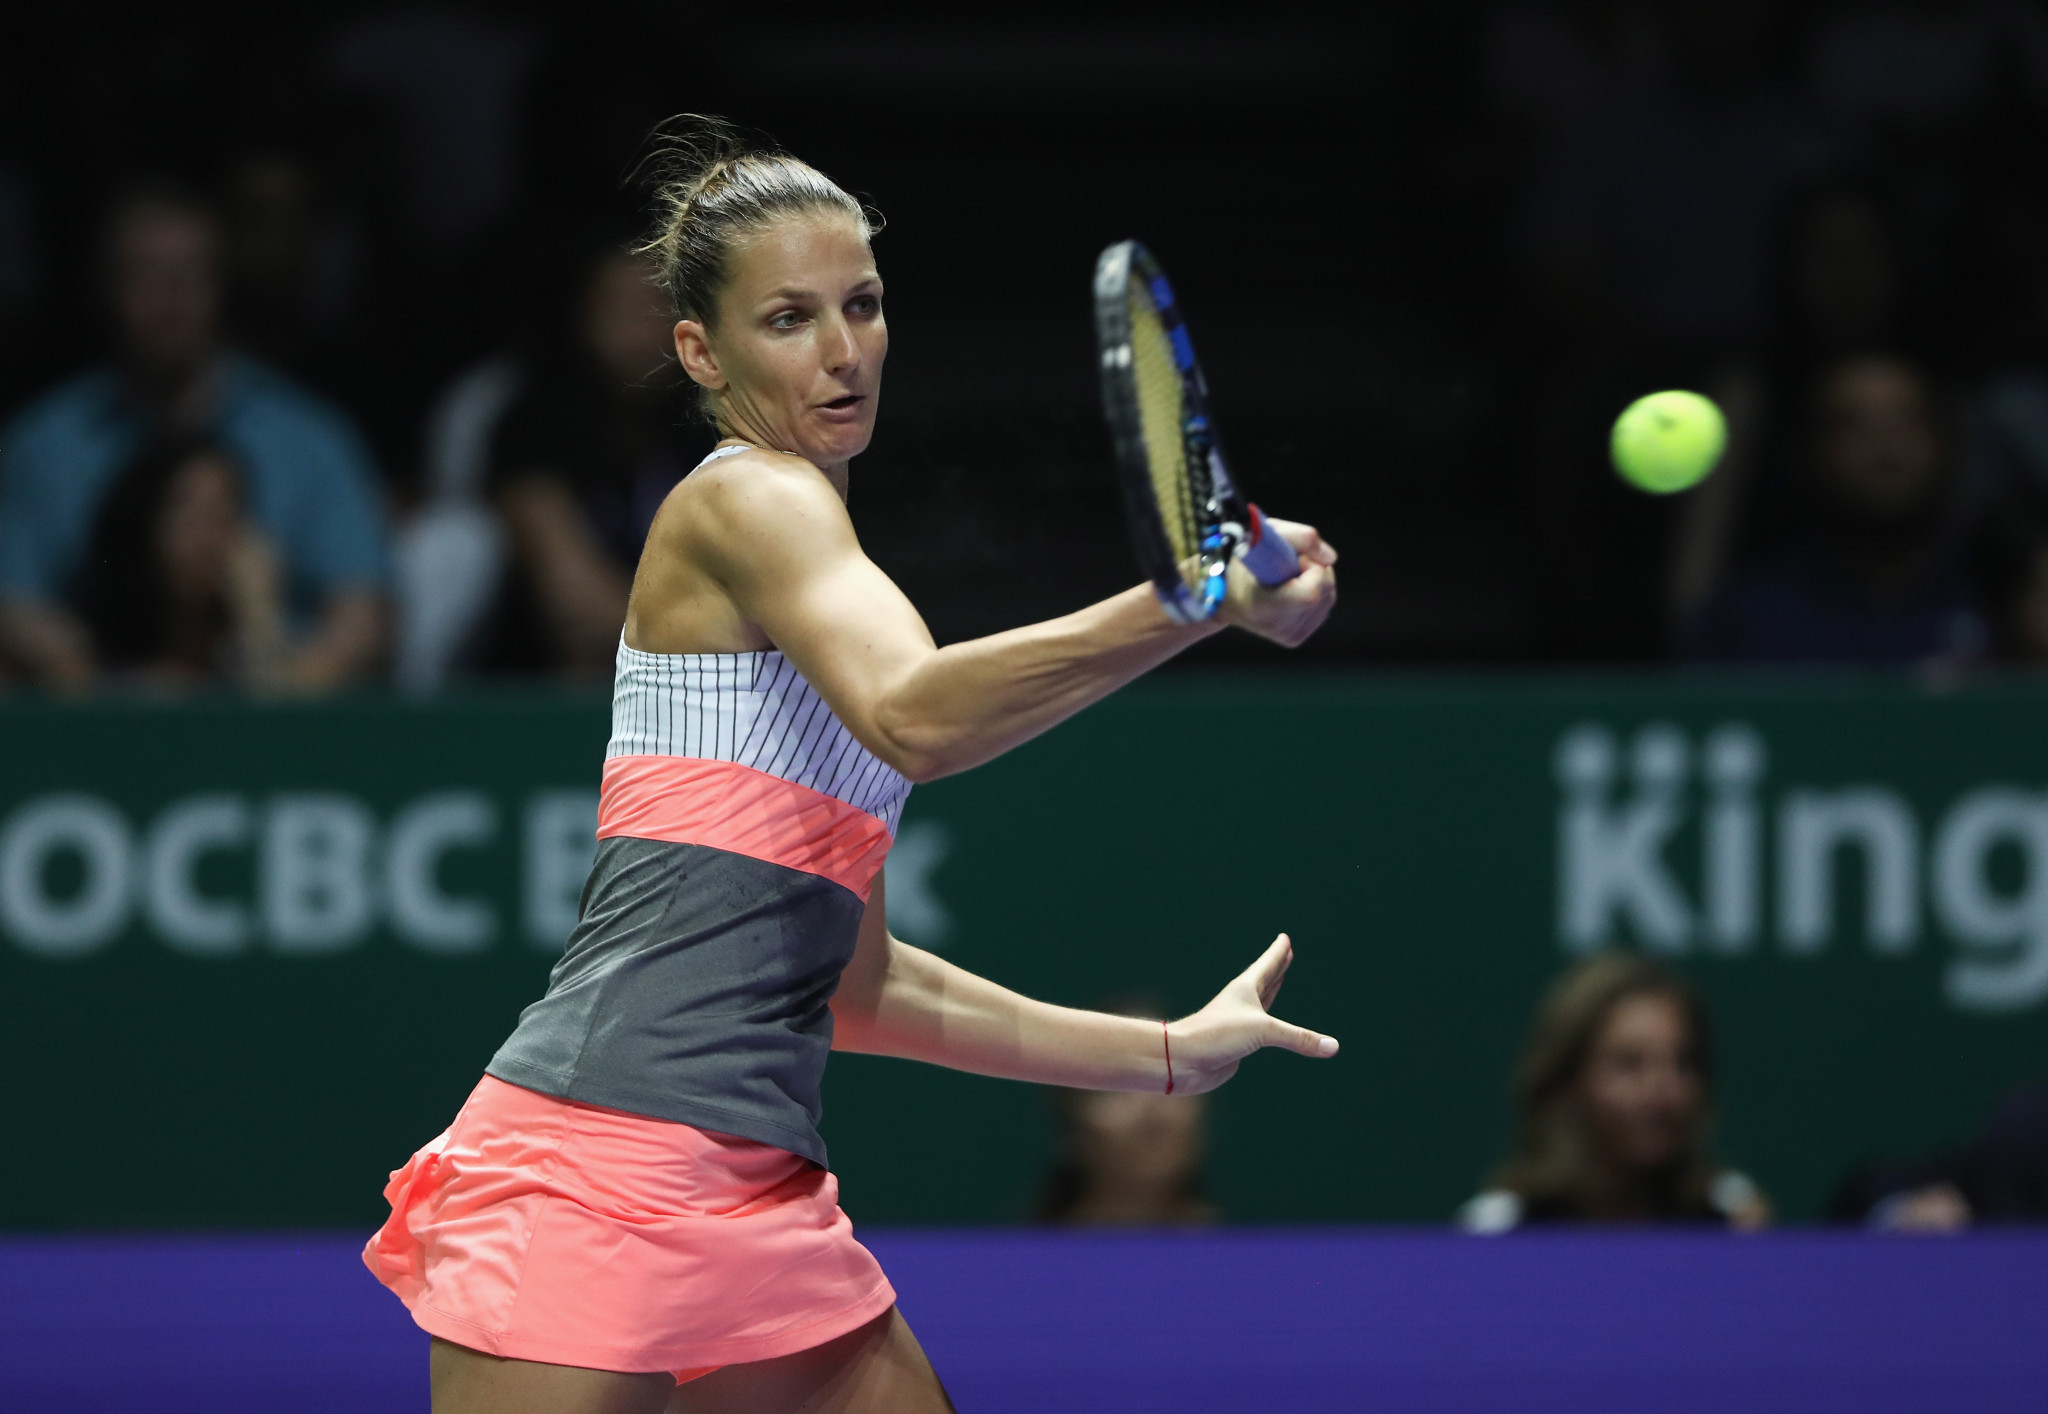 Plíšková to headline Prague tennis event as Berlin tournament targets Federer